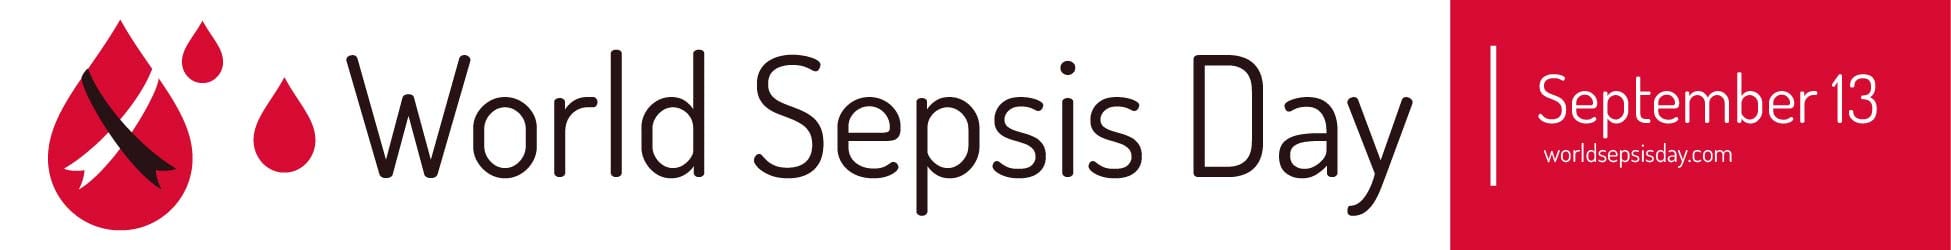 World Sepsis Day Website Banner